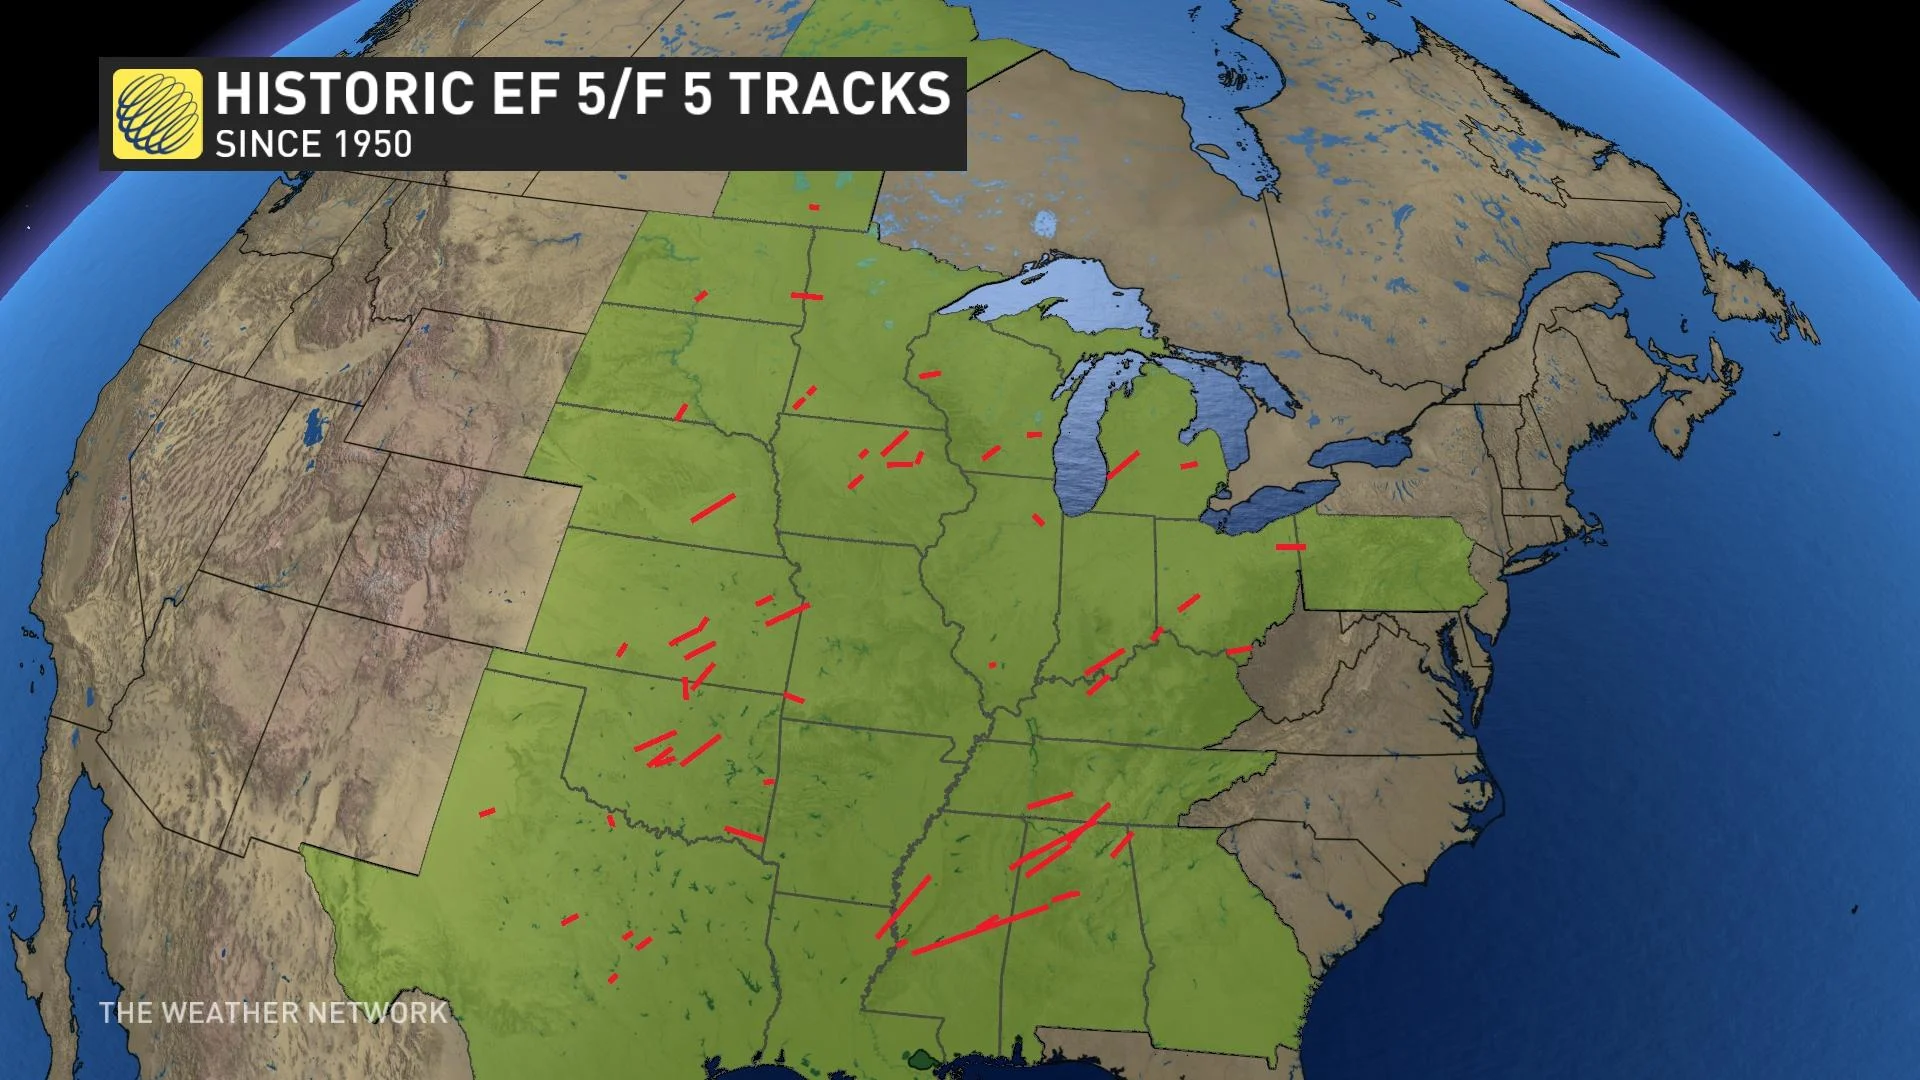 Historic F5 EF5 tornado tracks since 1950